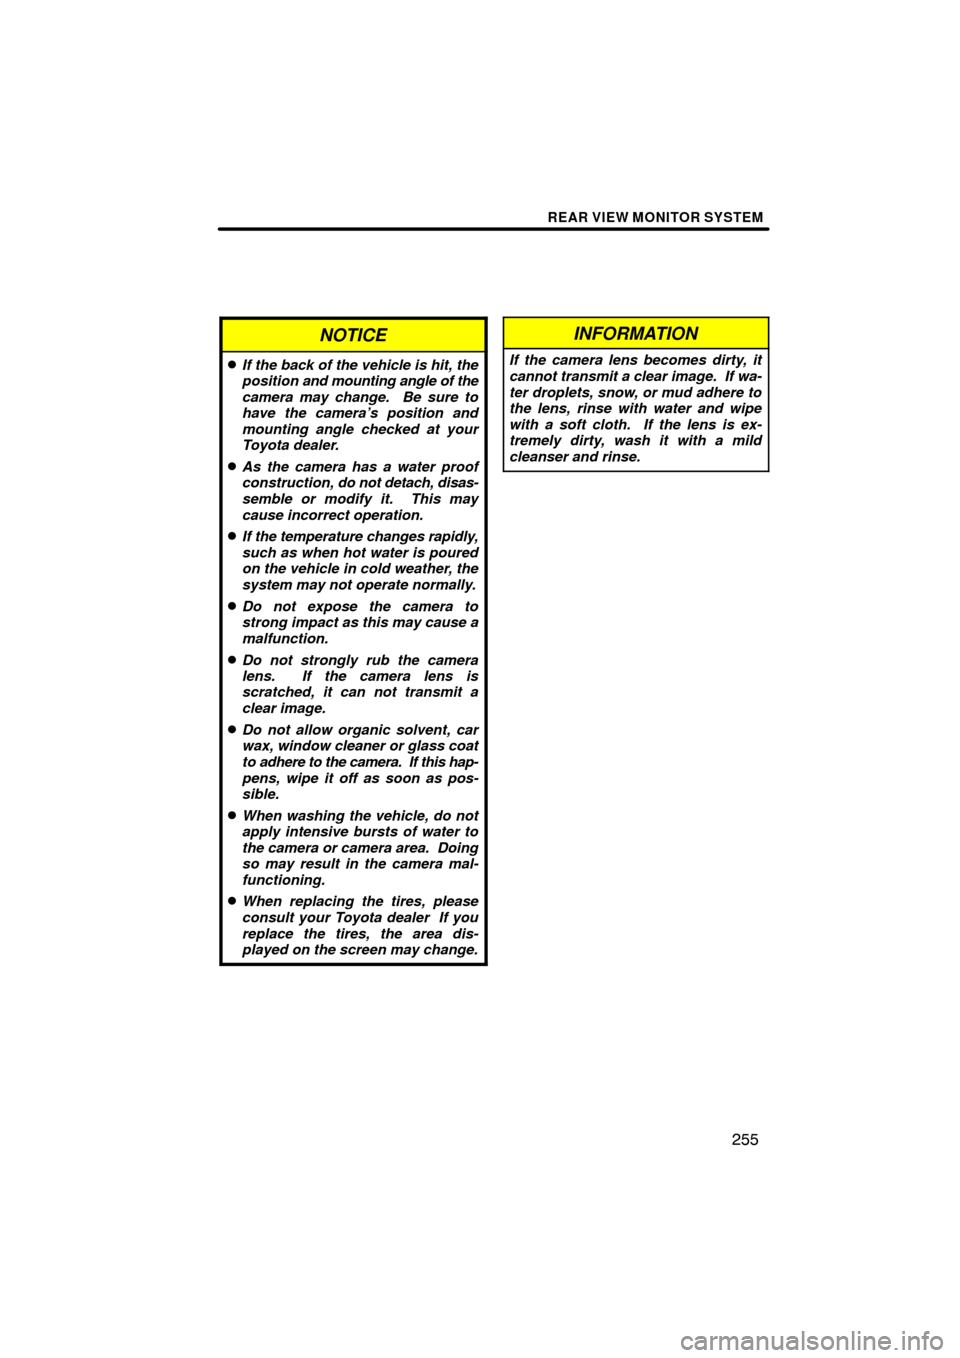 TOYOTA HIGHLANDER 2013 XU50 / 3.G Navigation Manual REAR VIEW MONITOR SYSTEM
255
NOTICE
If the back of the vehicle is hit, the
position and mounting angle of the
camera may change.  Be sure to
have the camera’s position and
mounting angle checked at